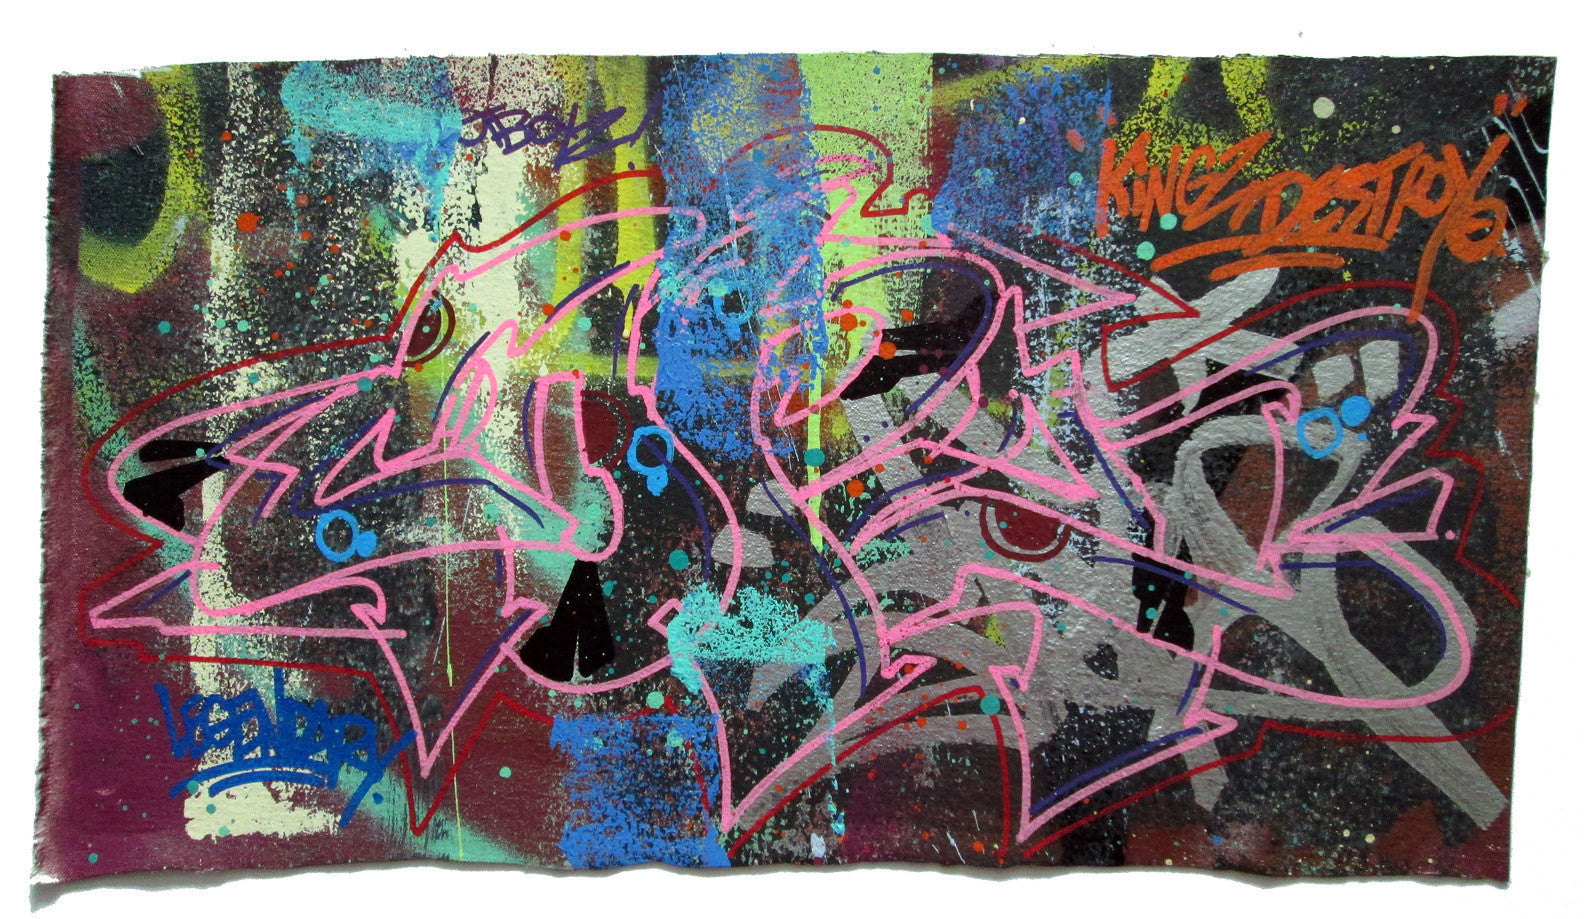 COPE2 - "Kingz Destroy" Painting